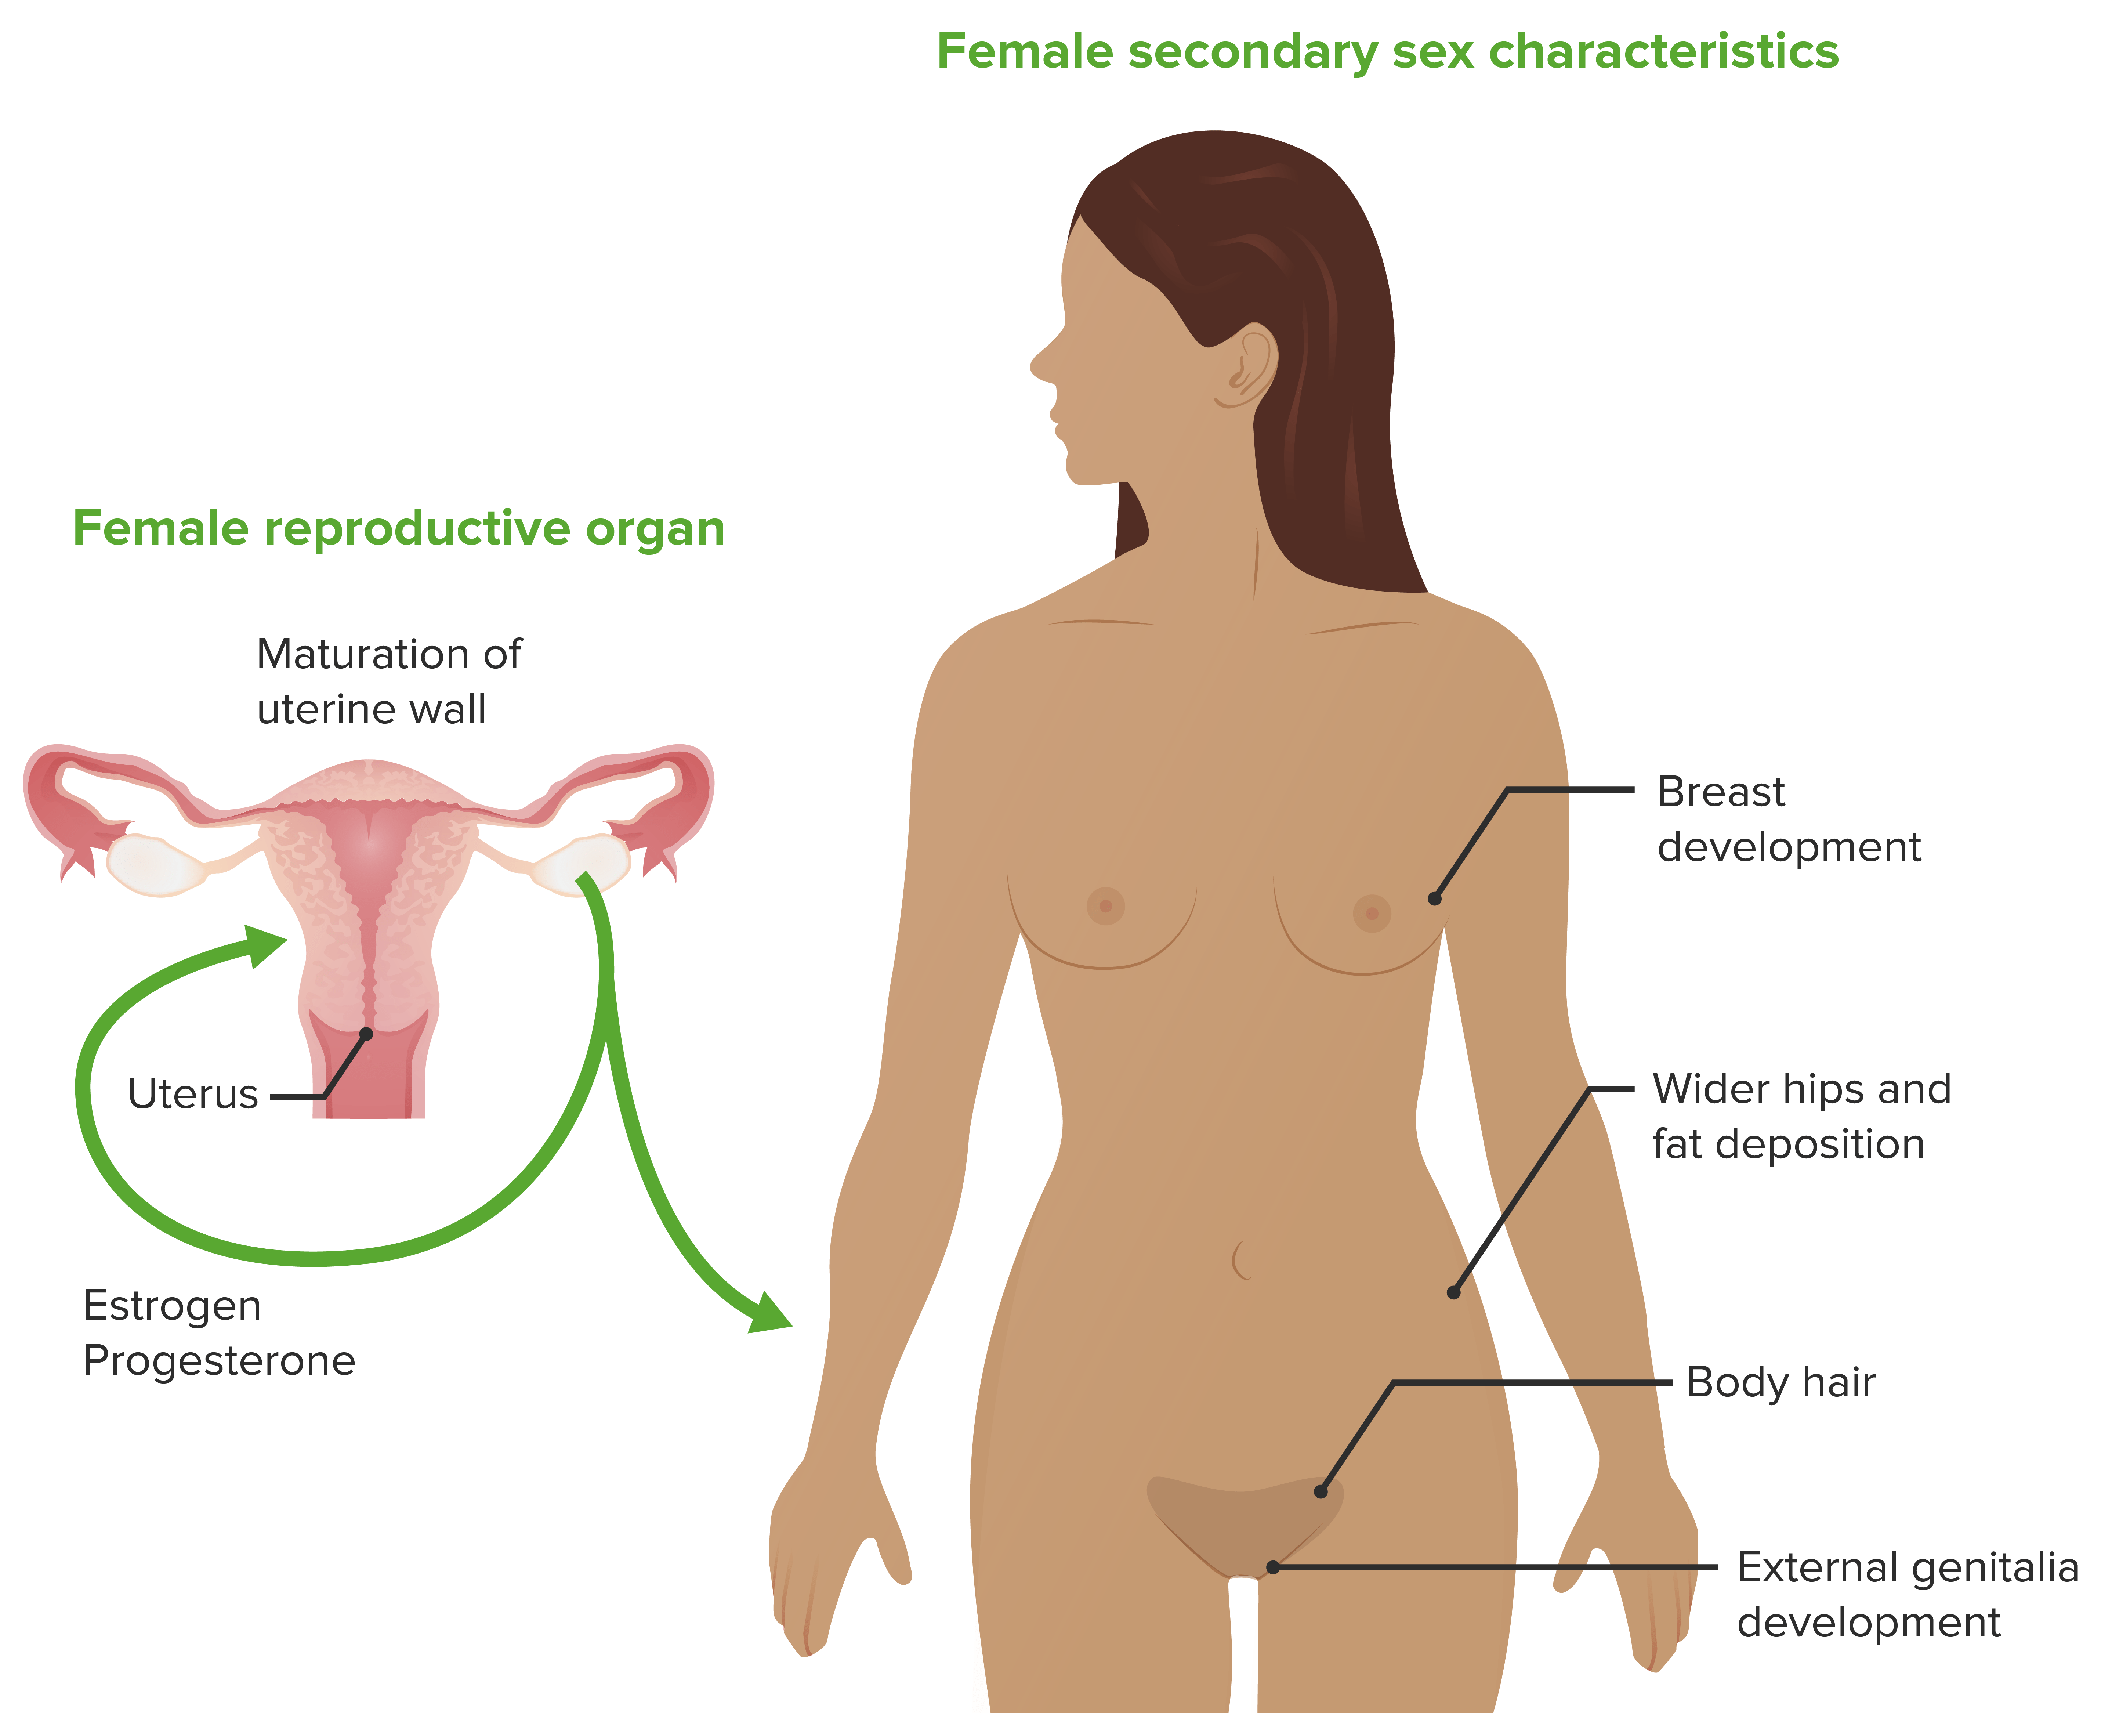 Female secondary sex characteristics